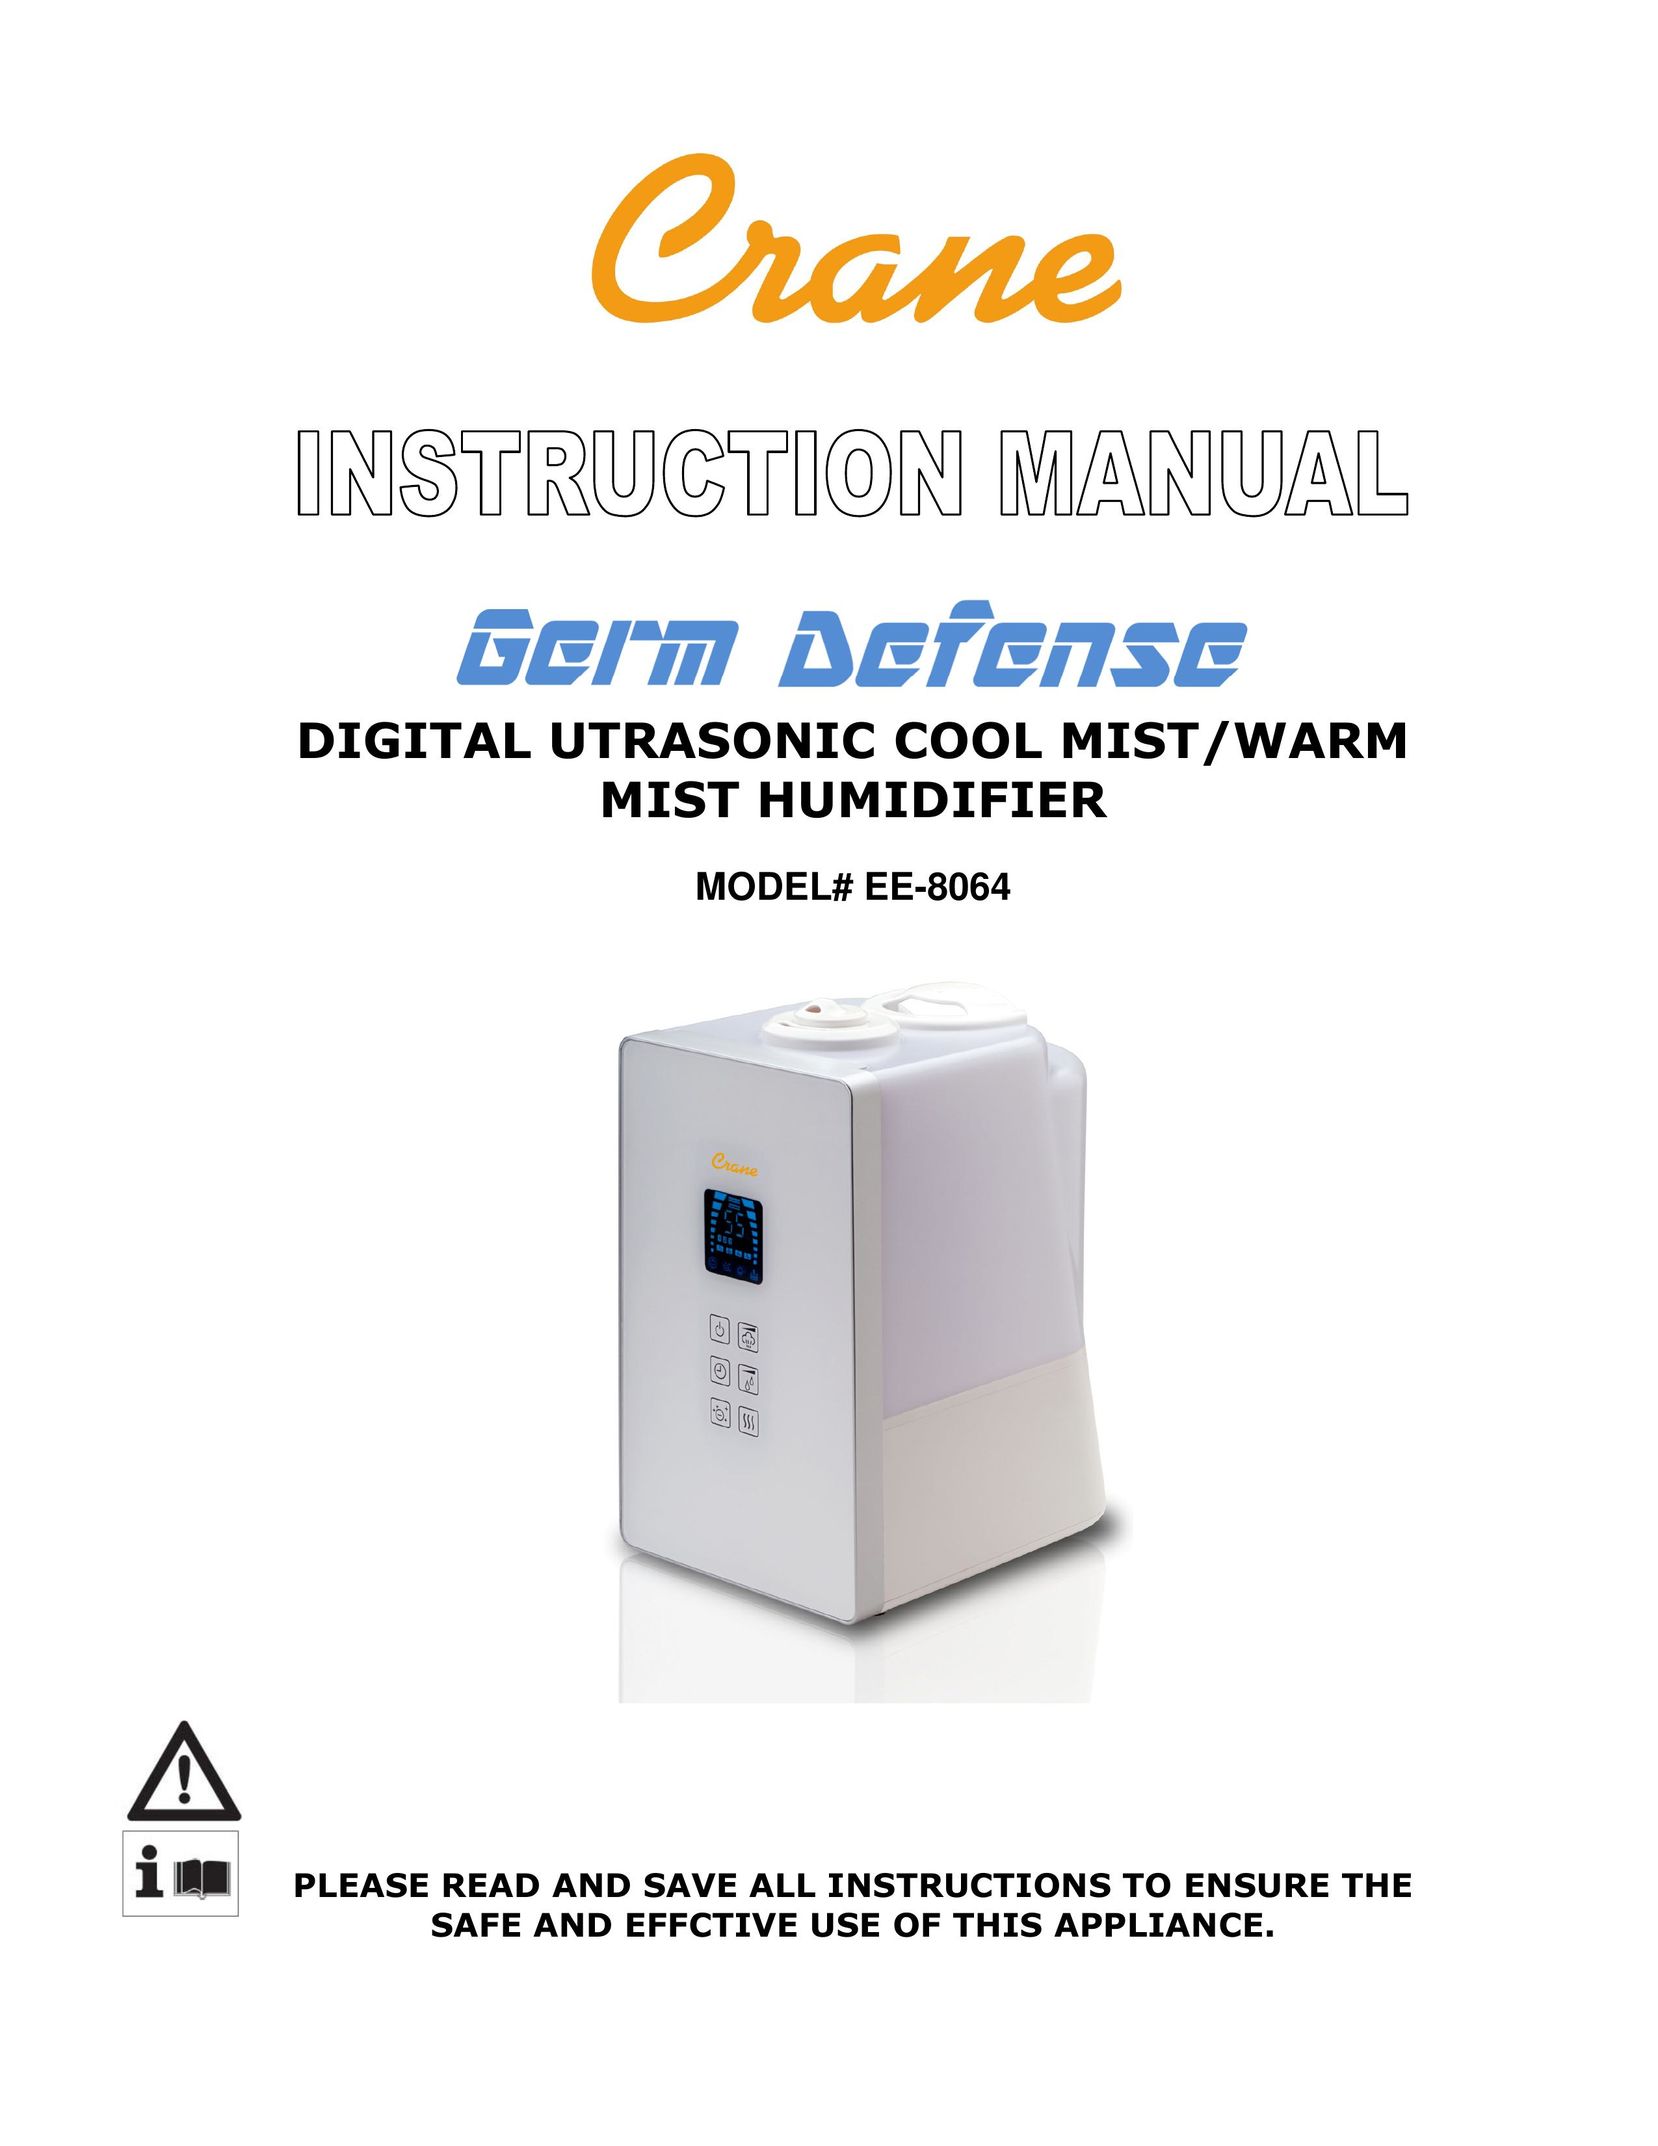 Crane EE-8064 Humidifier User Manual